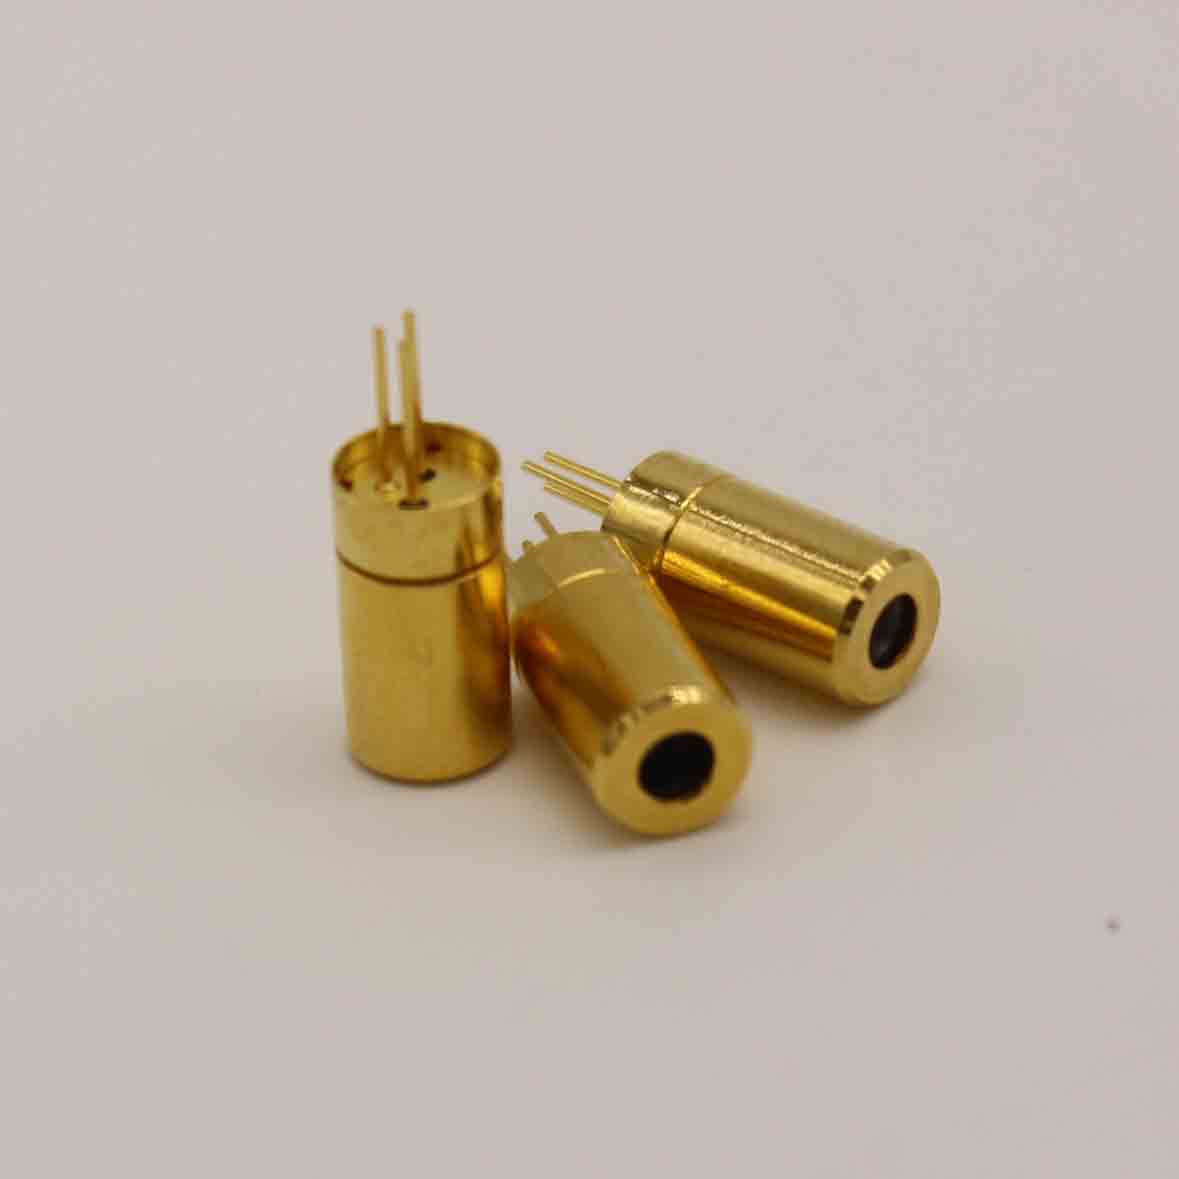 PIN Laser 6x12mm Piccolo puntatore laser Puntatore laser 635nm 5mW per impugnature laser pistola